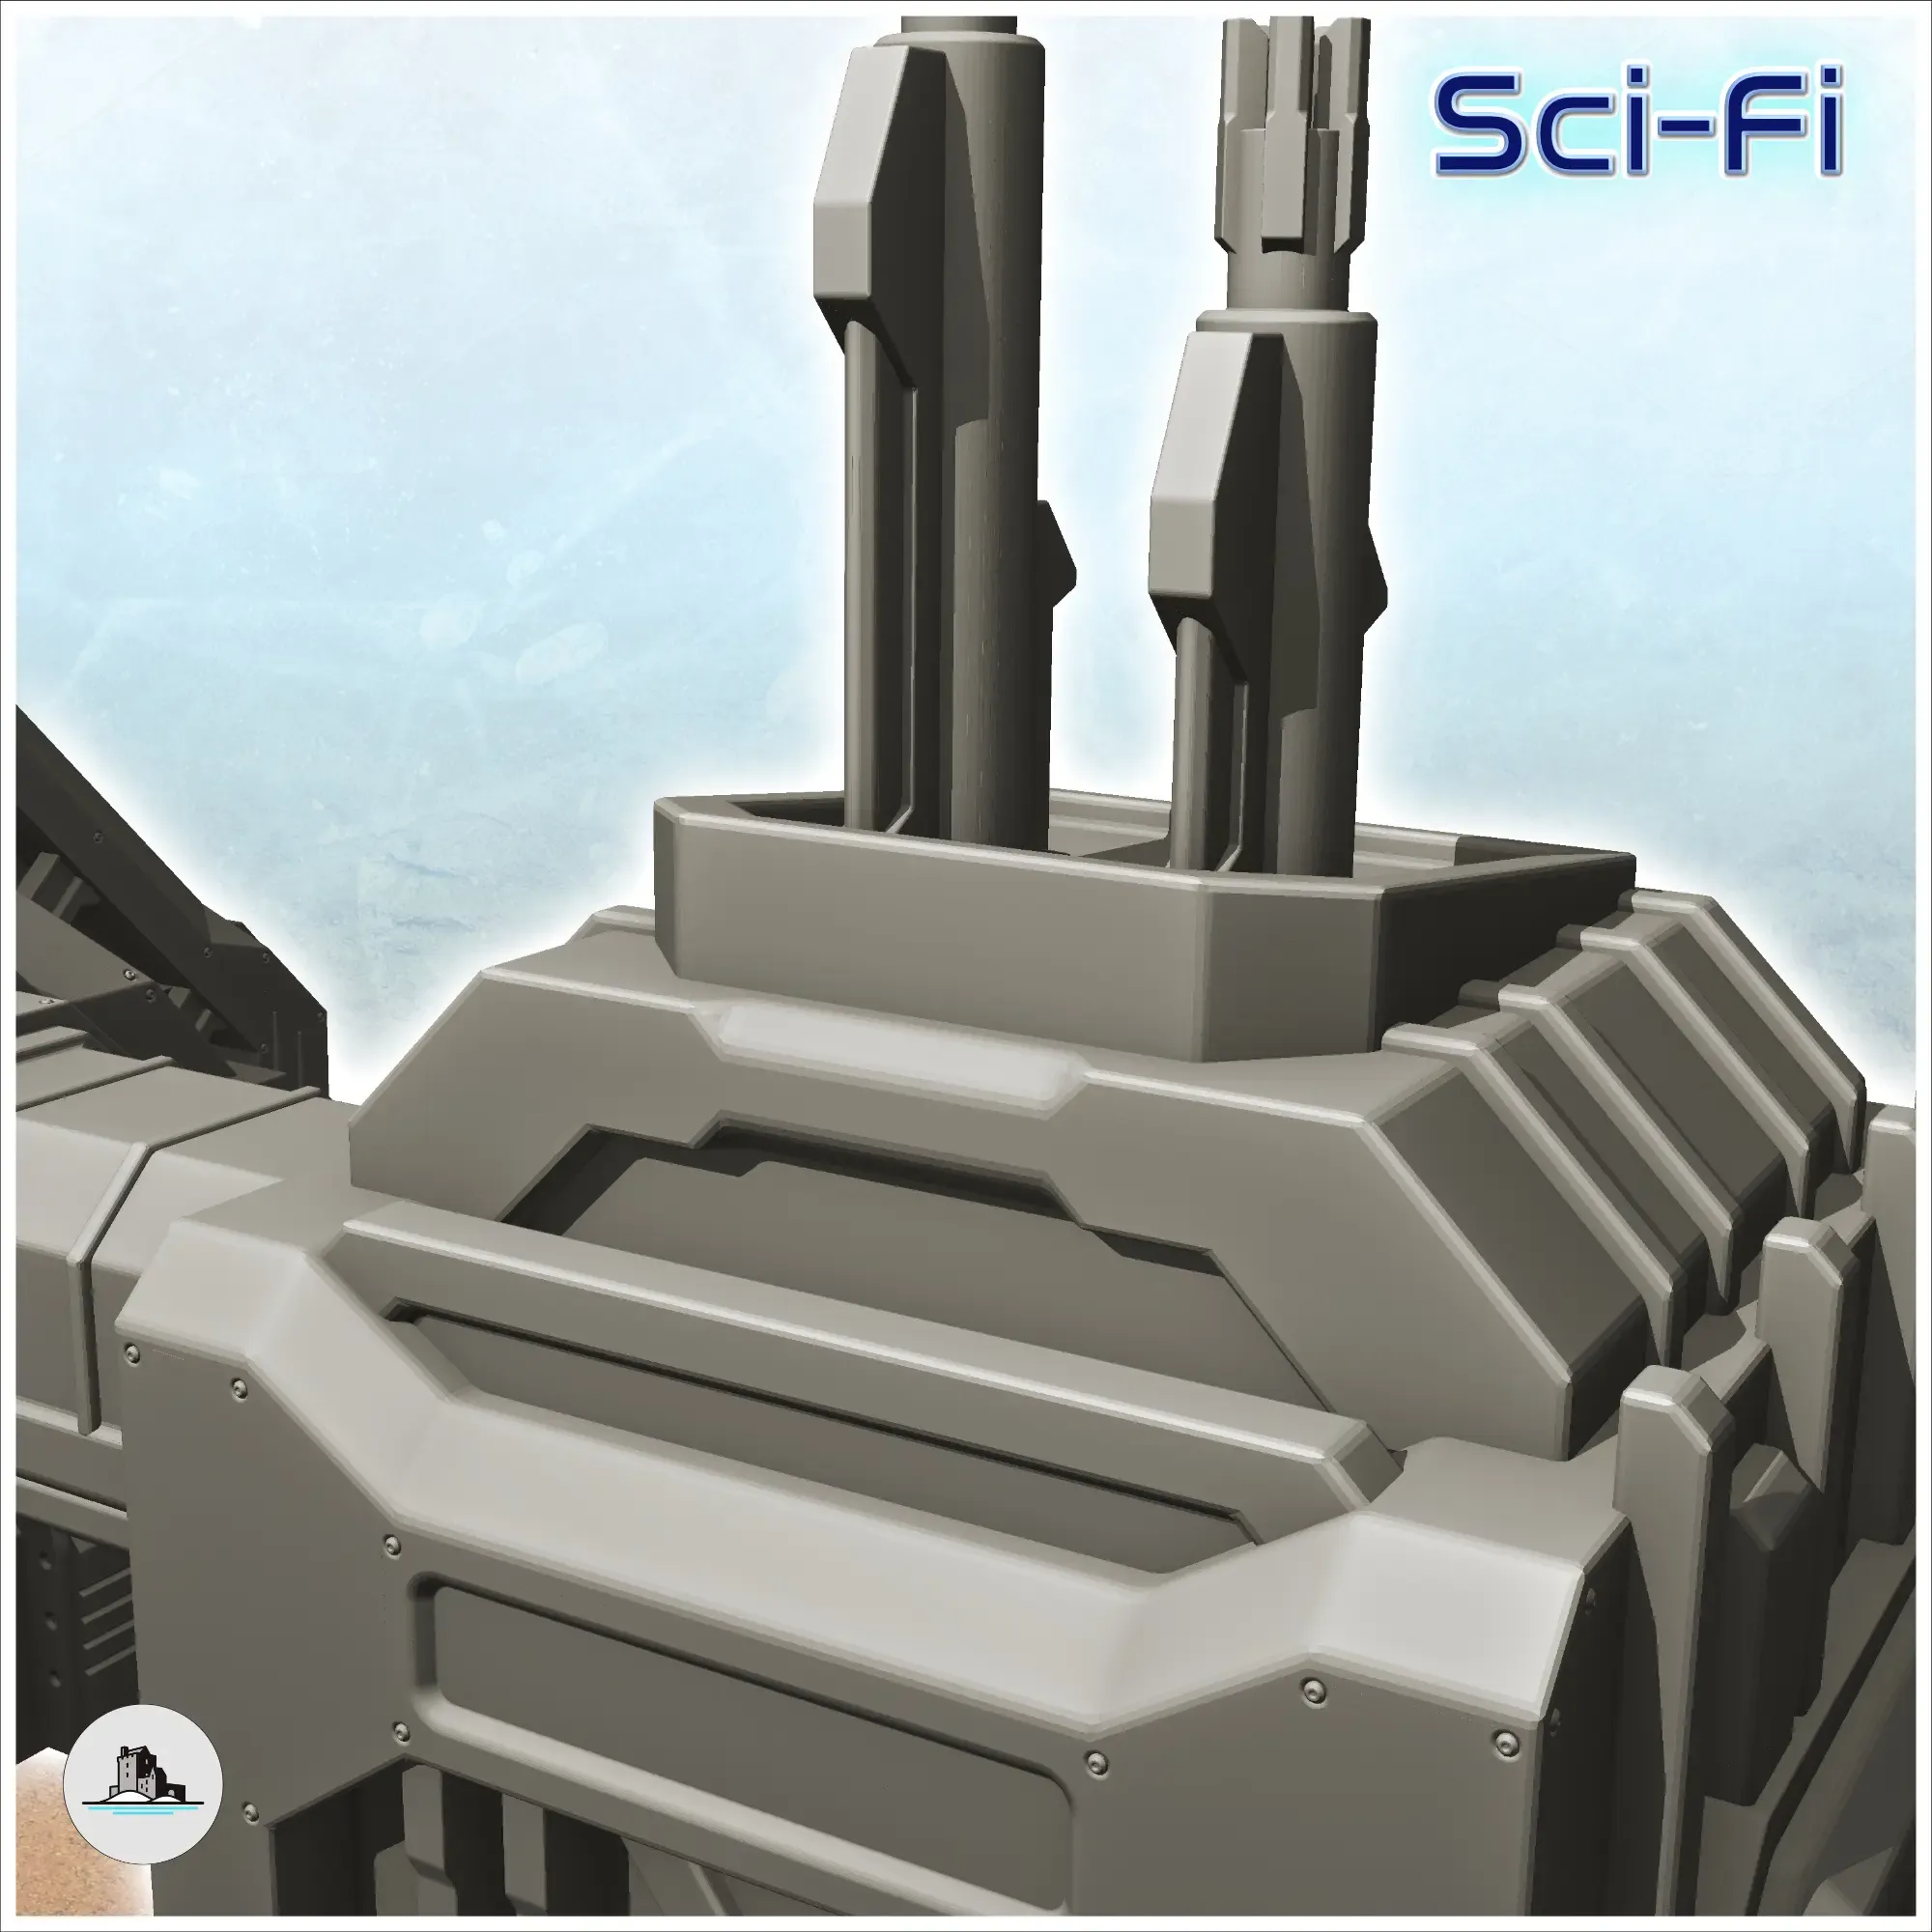 Space coordination center - Terrain Scifi Science fiction SF